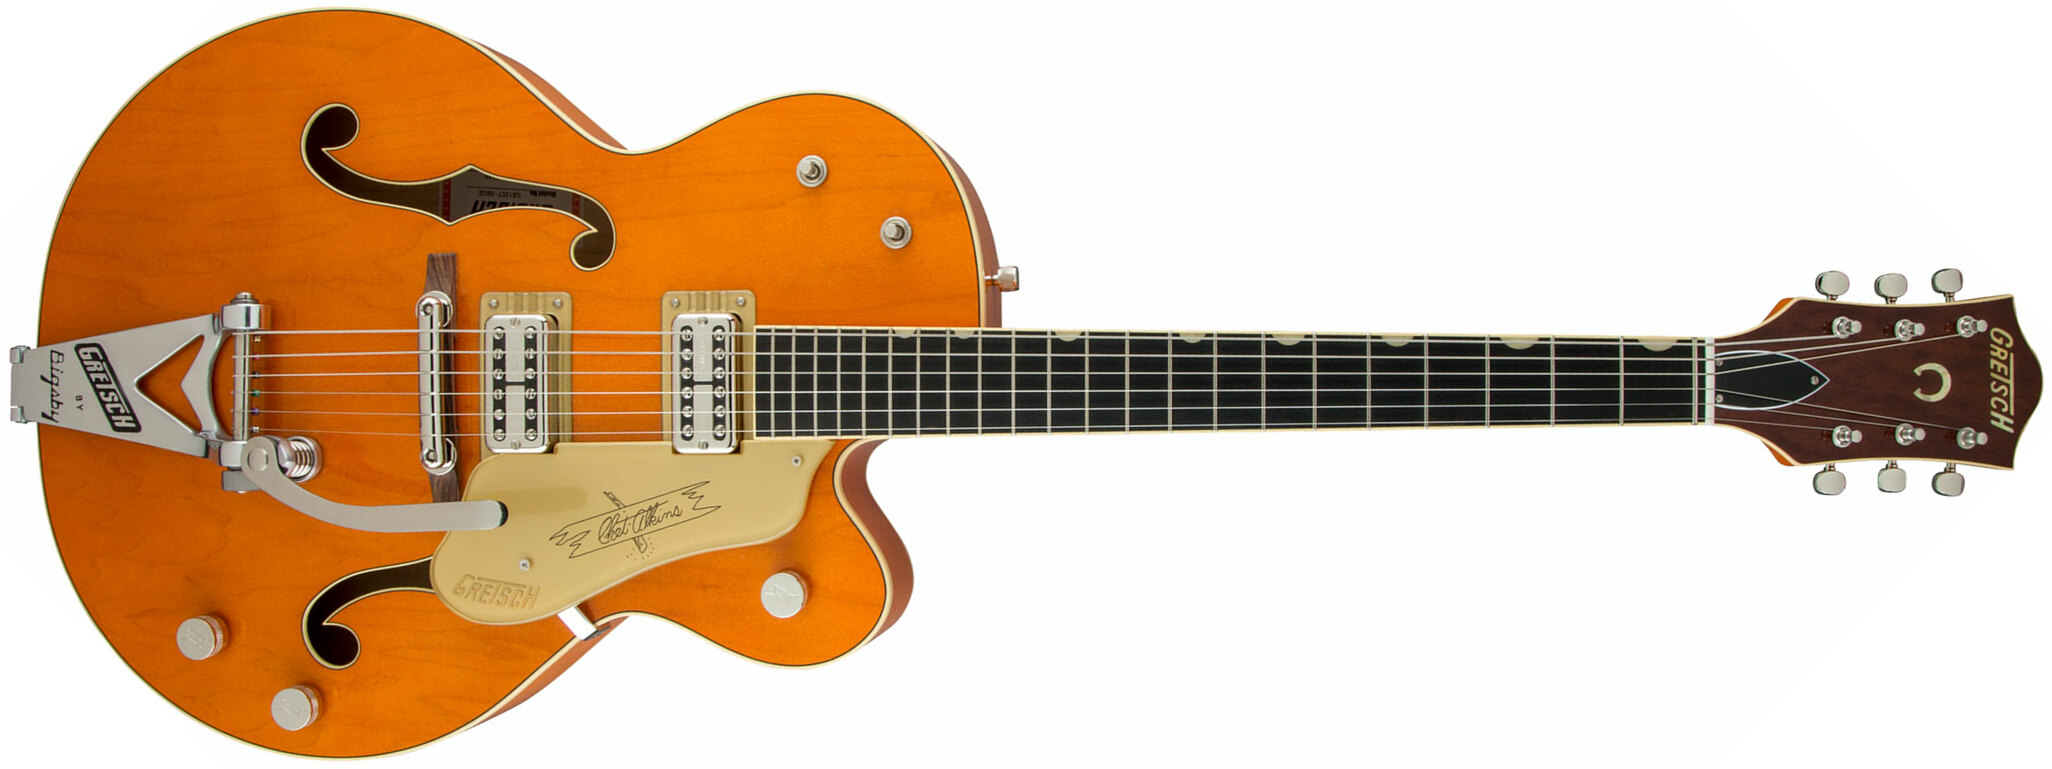 Gretsch Chet Atkins G6120t-59 Vintage Select 1959 Bigsby Pro Jap 2h Tv Jones Trem Eb - Vintage Orange Stain - Hollow-body electric guitar - Main pictu